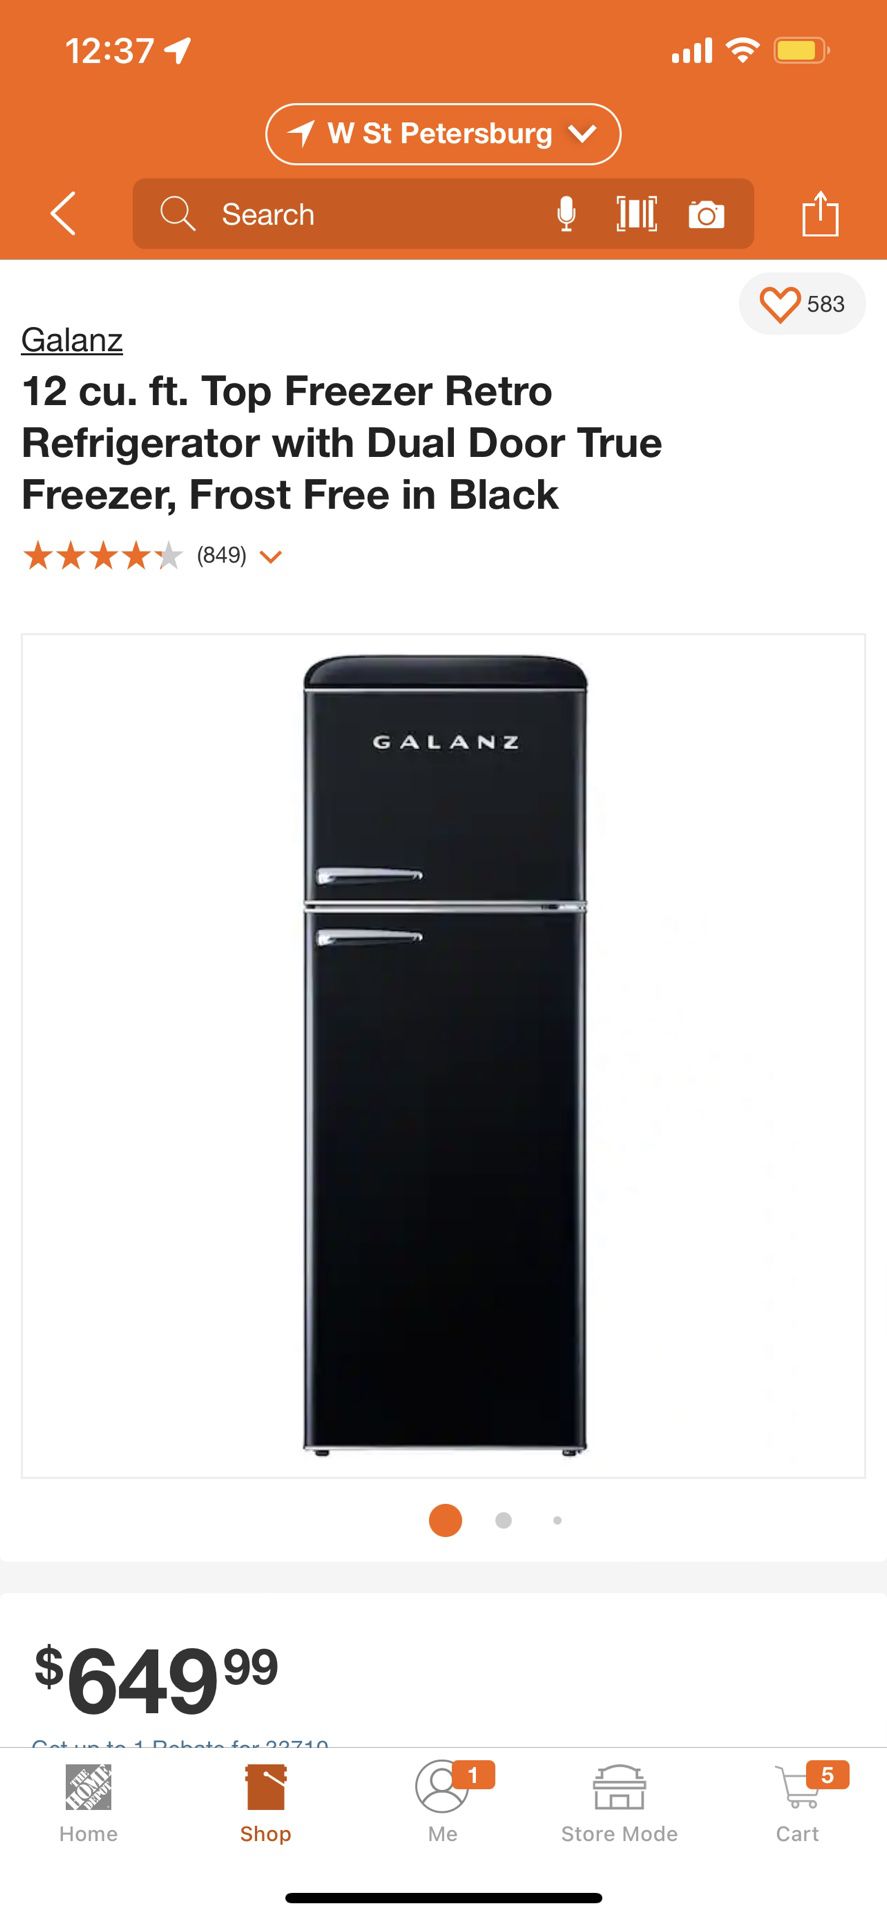 Galanz 12 cu. ft. Top Freezer Retro Refrigerator with Dual Door